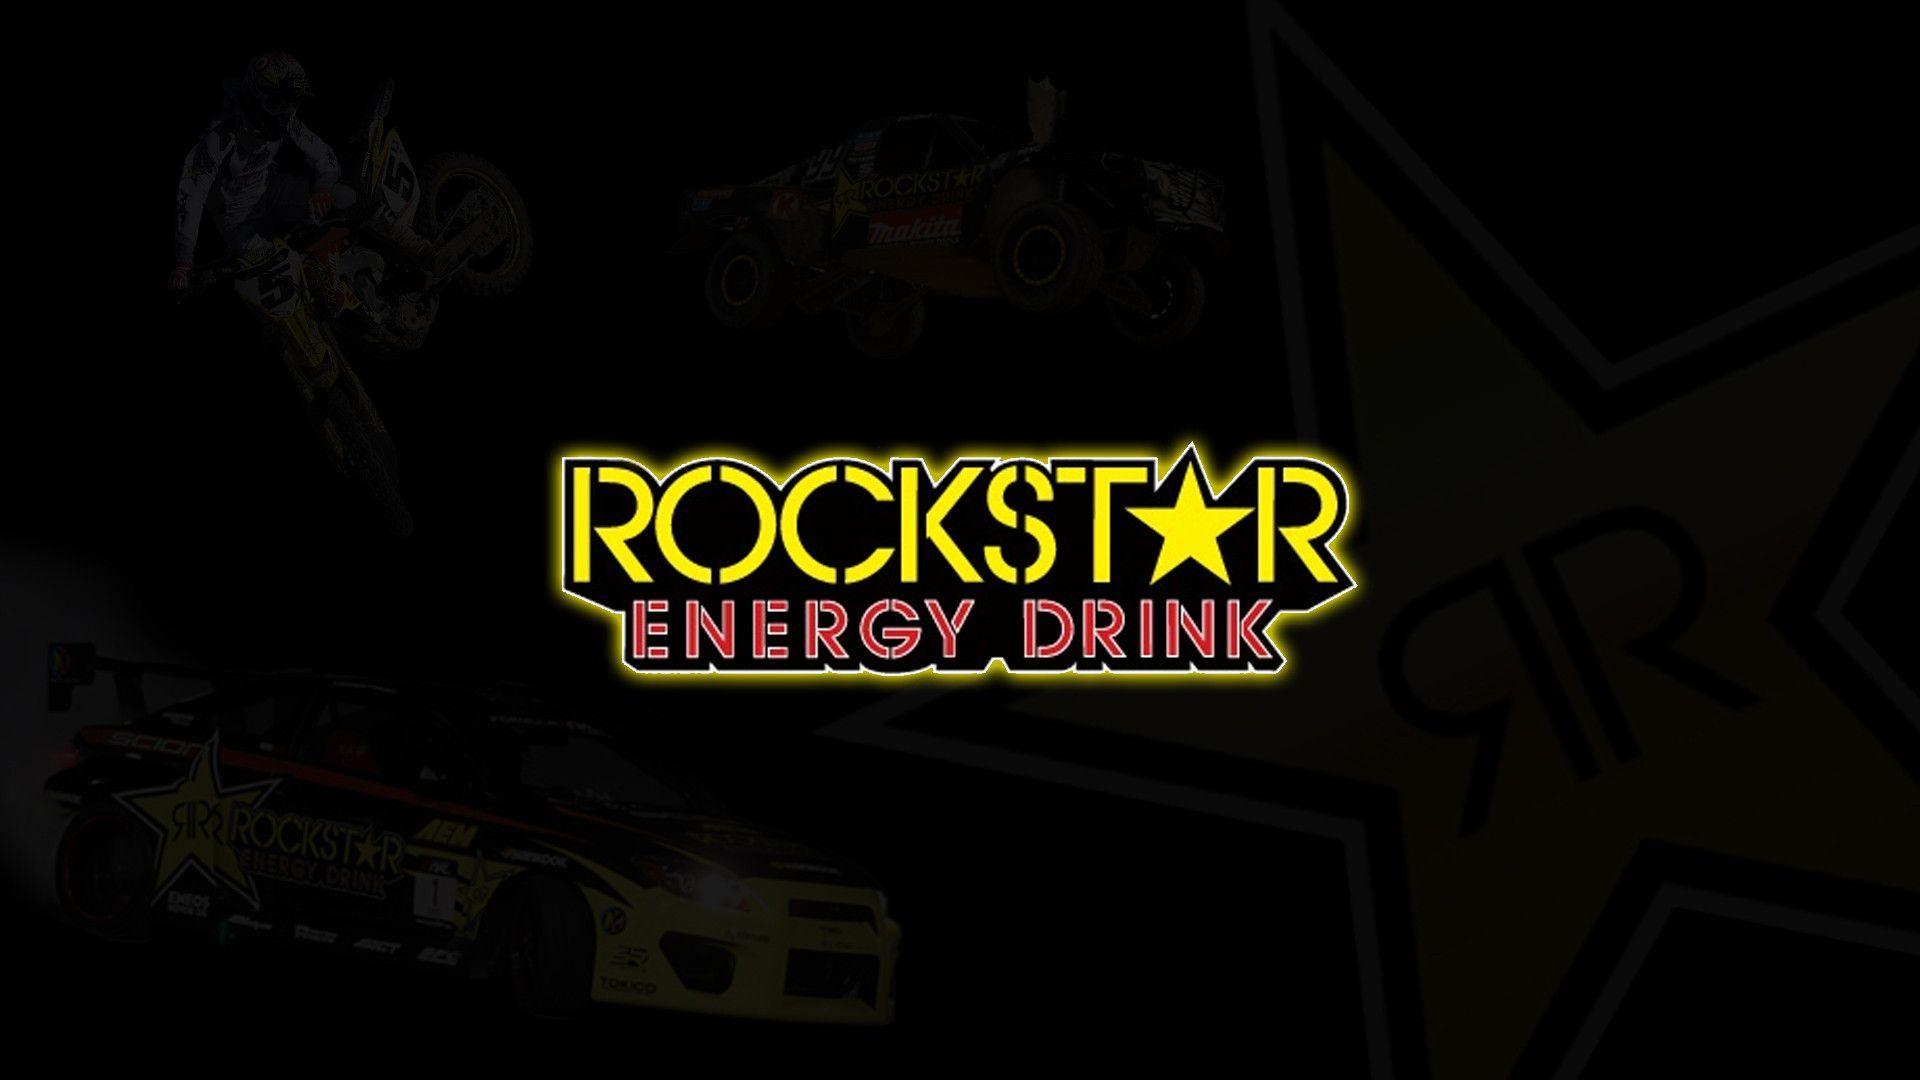 Rockstar Energy Drink Logo Desktop Wallpaper 58816 1920x1080 px